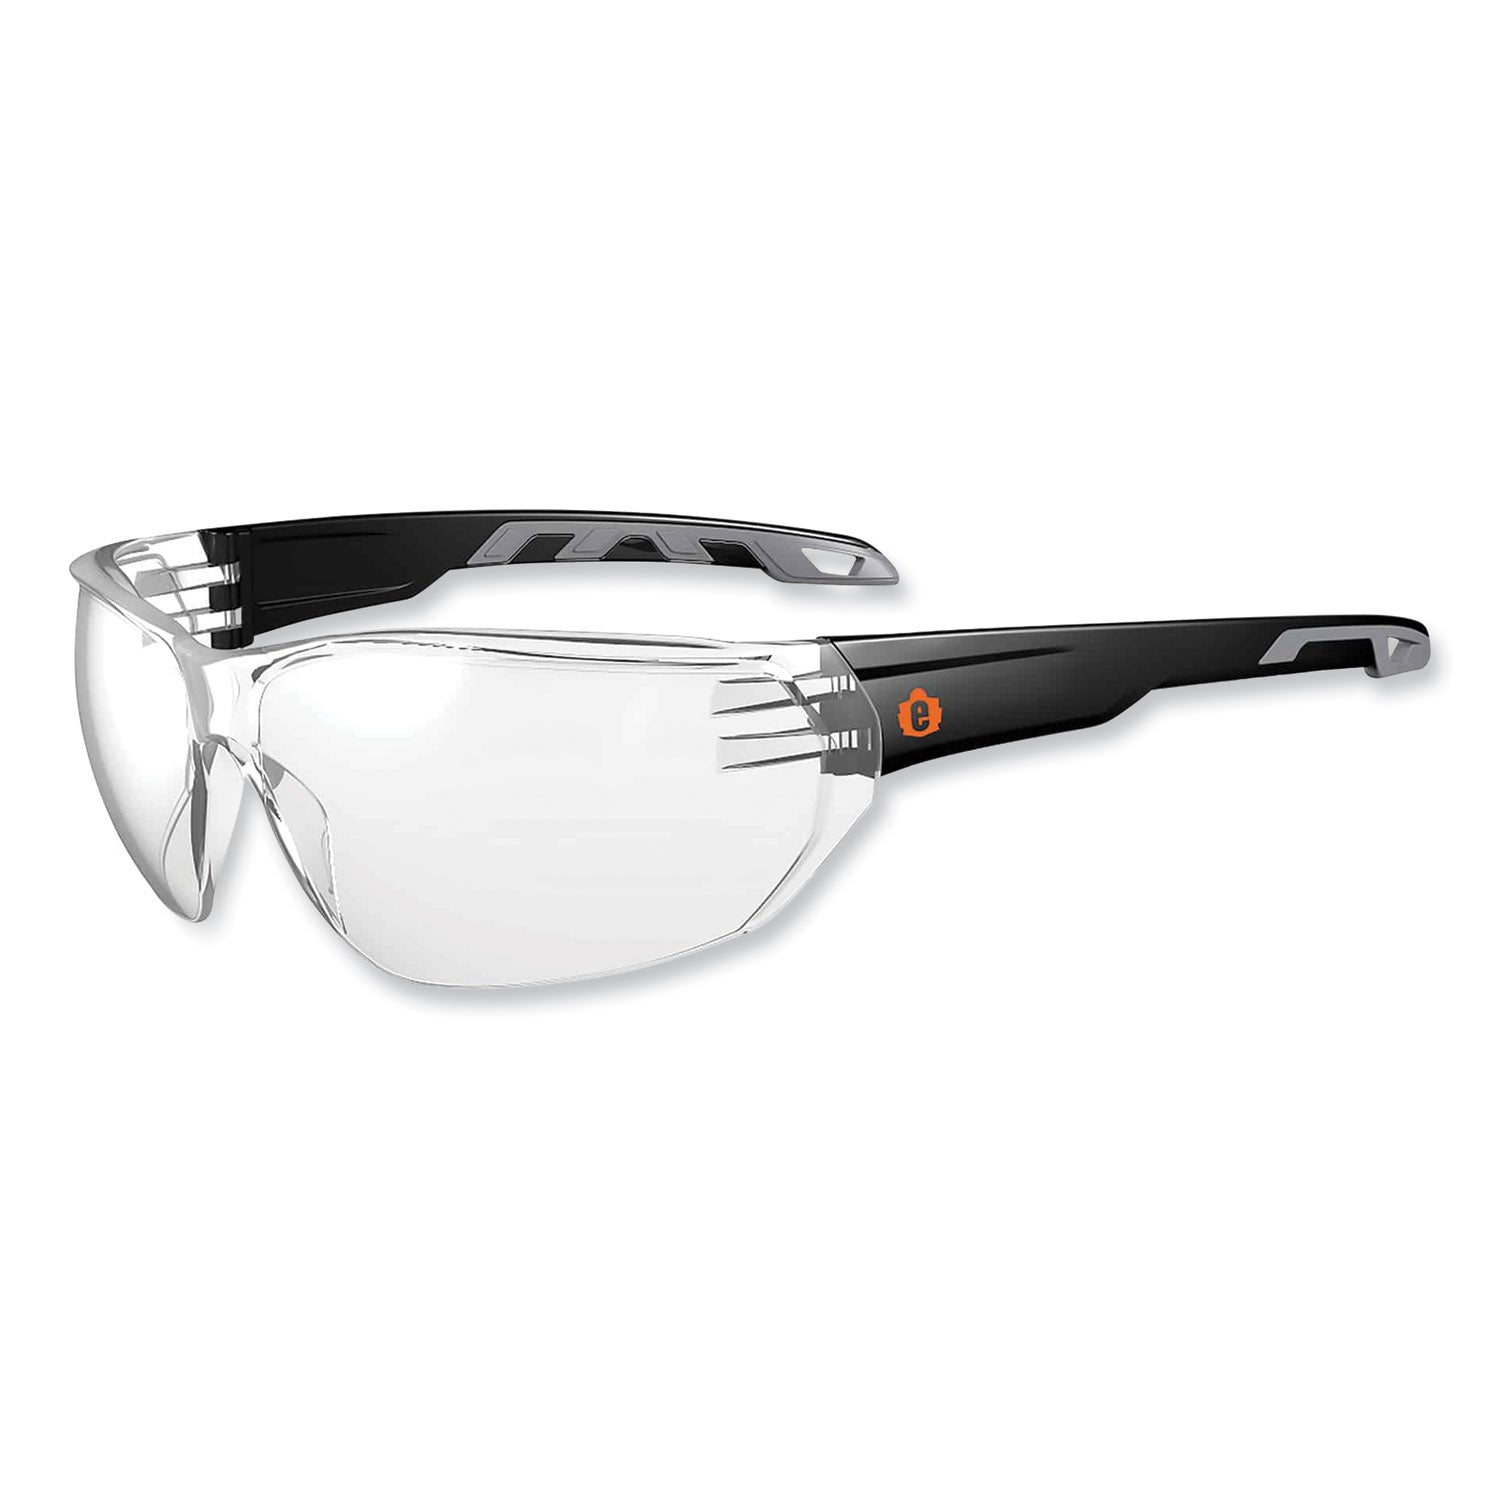 skullerz-vali-frameless-safety-glasses-matte-black-nylon-impact-frame-clear-polycarbonate-lens-ships-in-1-3-business-days_ego59200 - 1